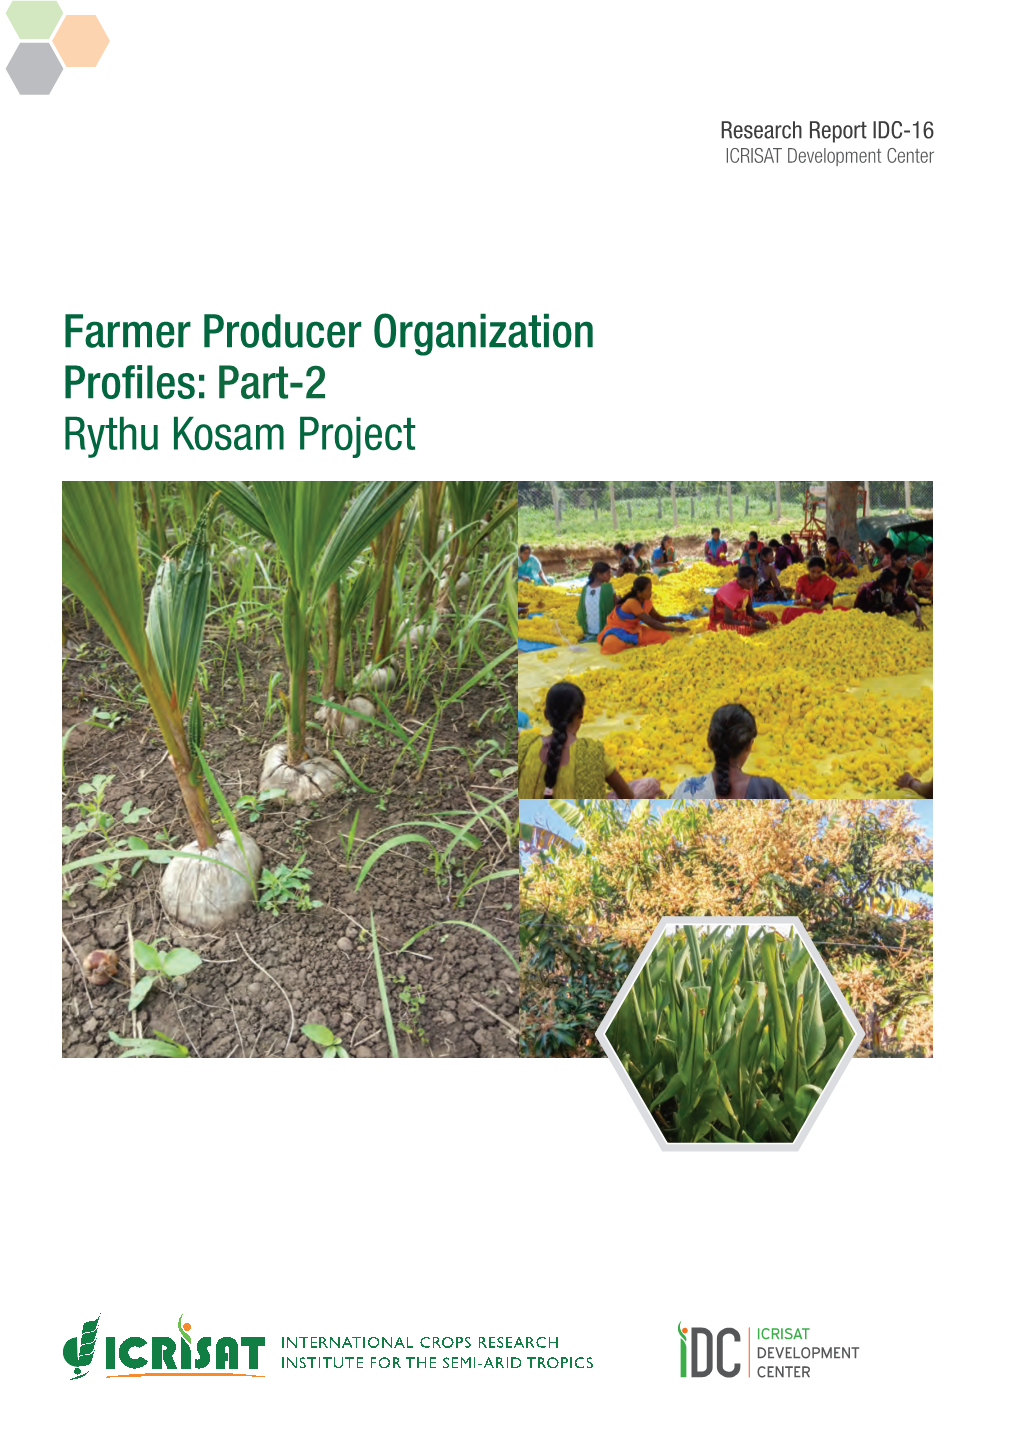 Farmer Producer Organization Profiles: Part-2 Rythu Kosam Project